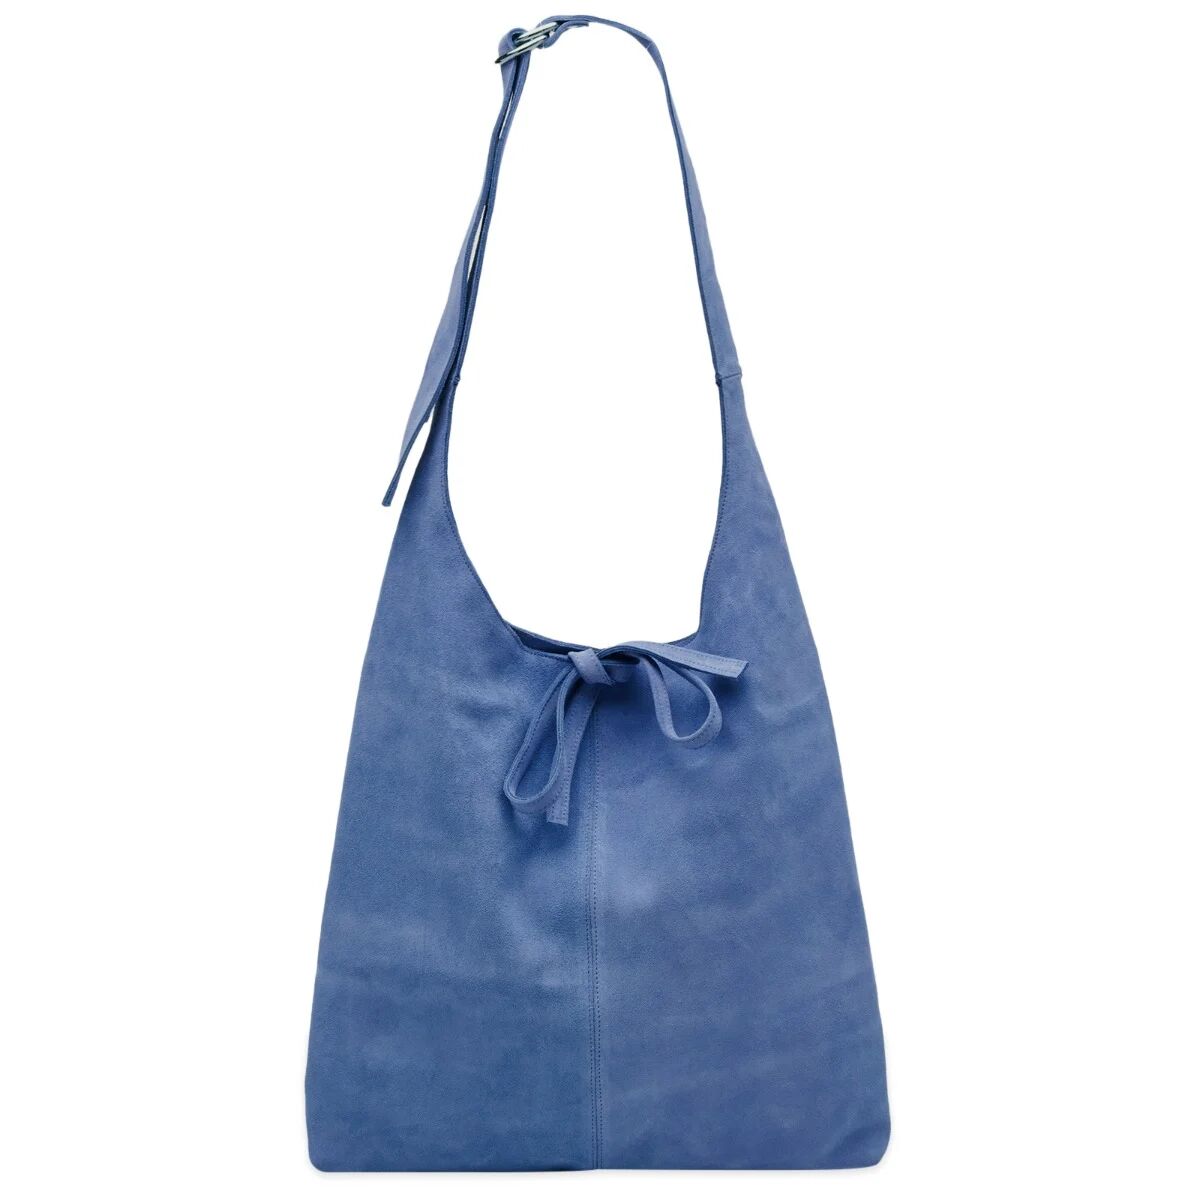 NONA Women's Slouchy Tote Bag in Dusty Blue